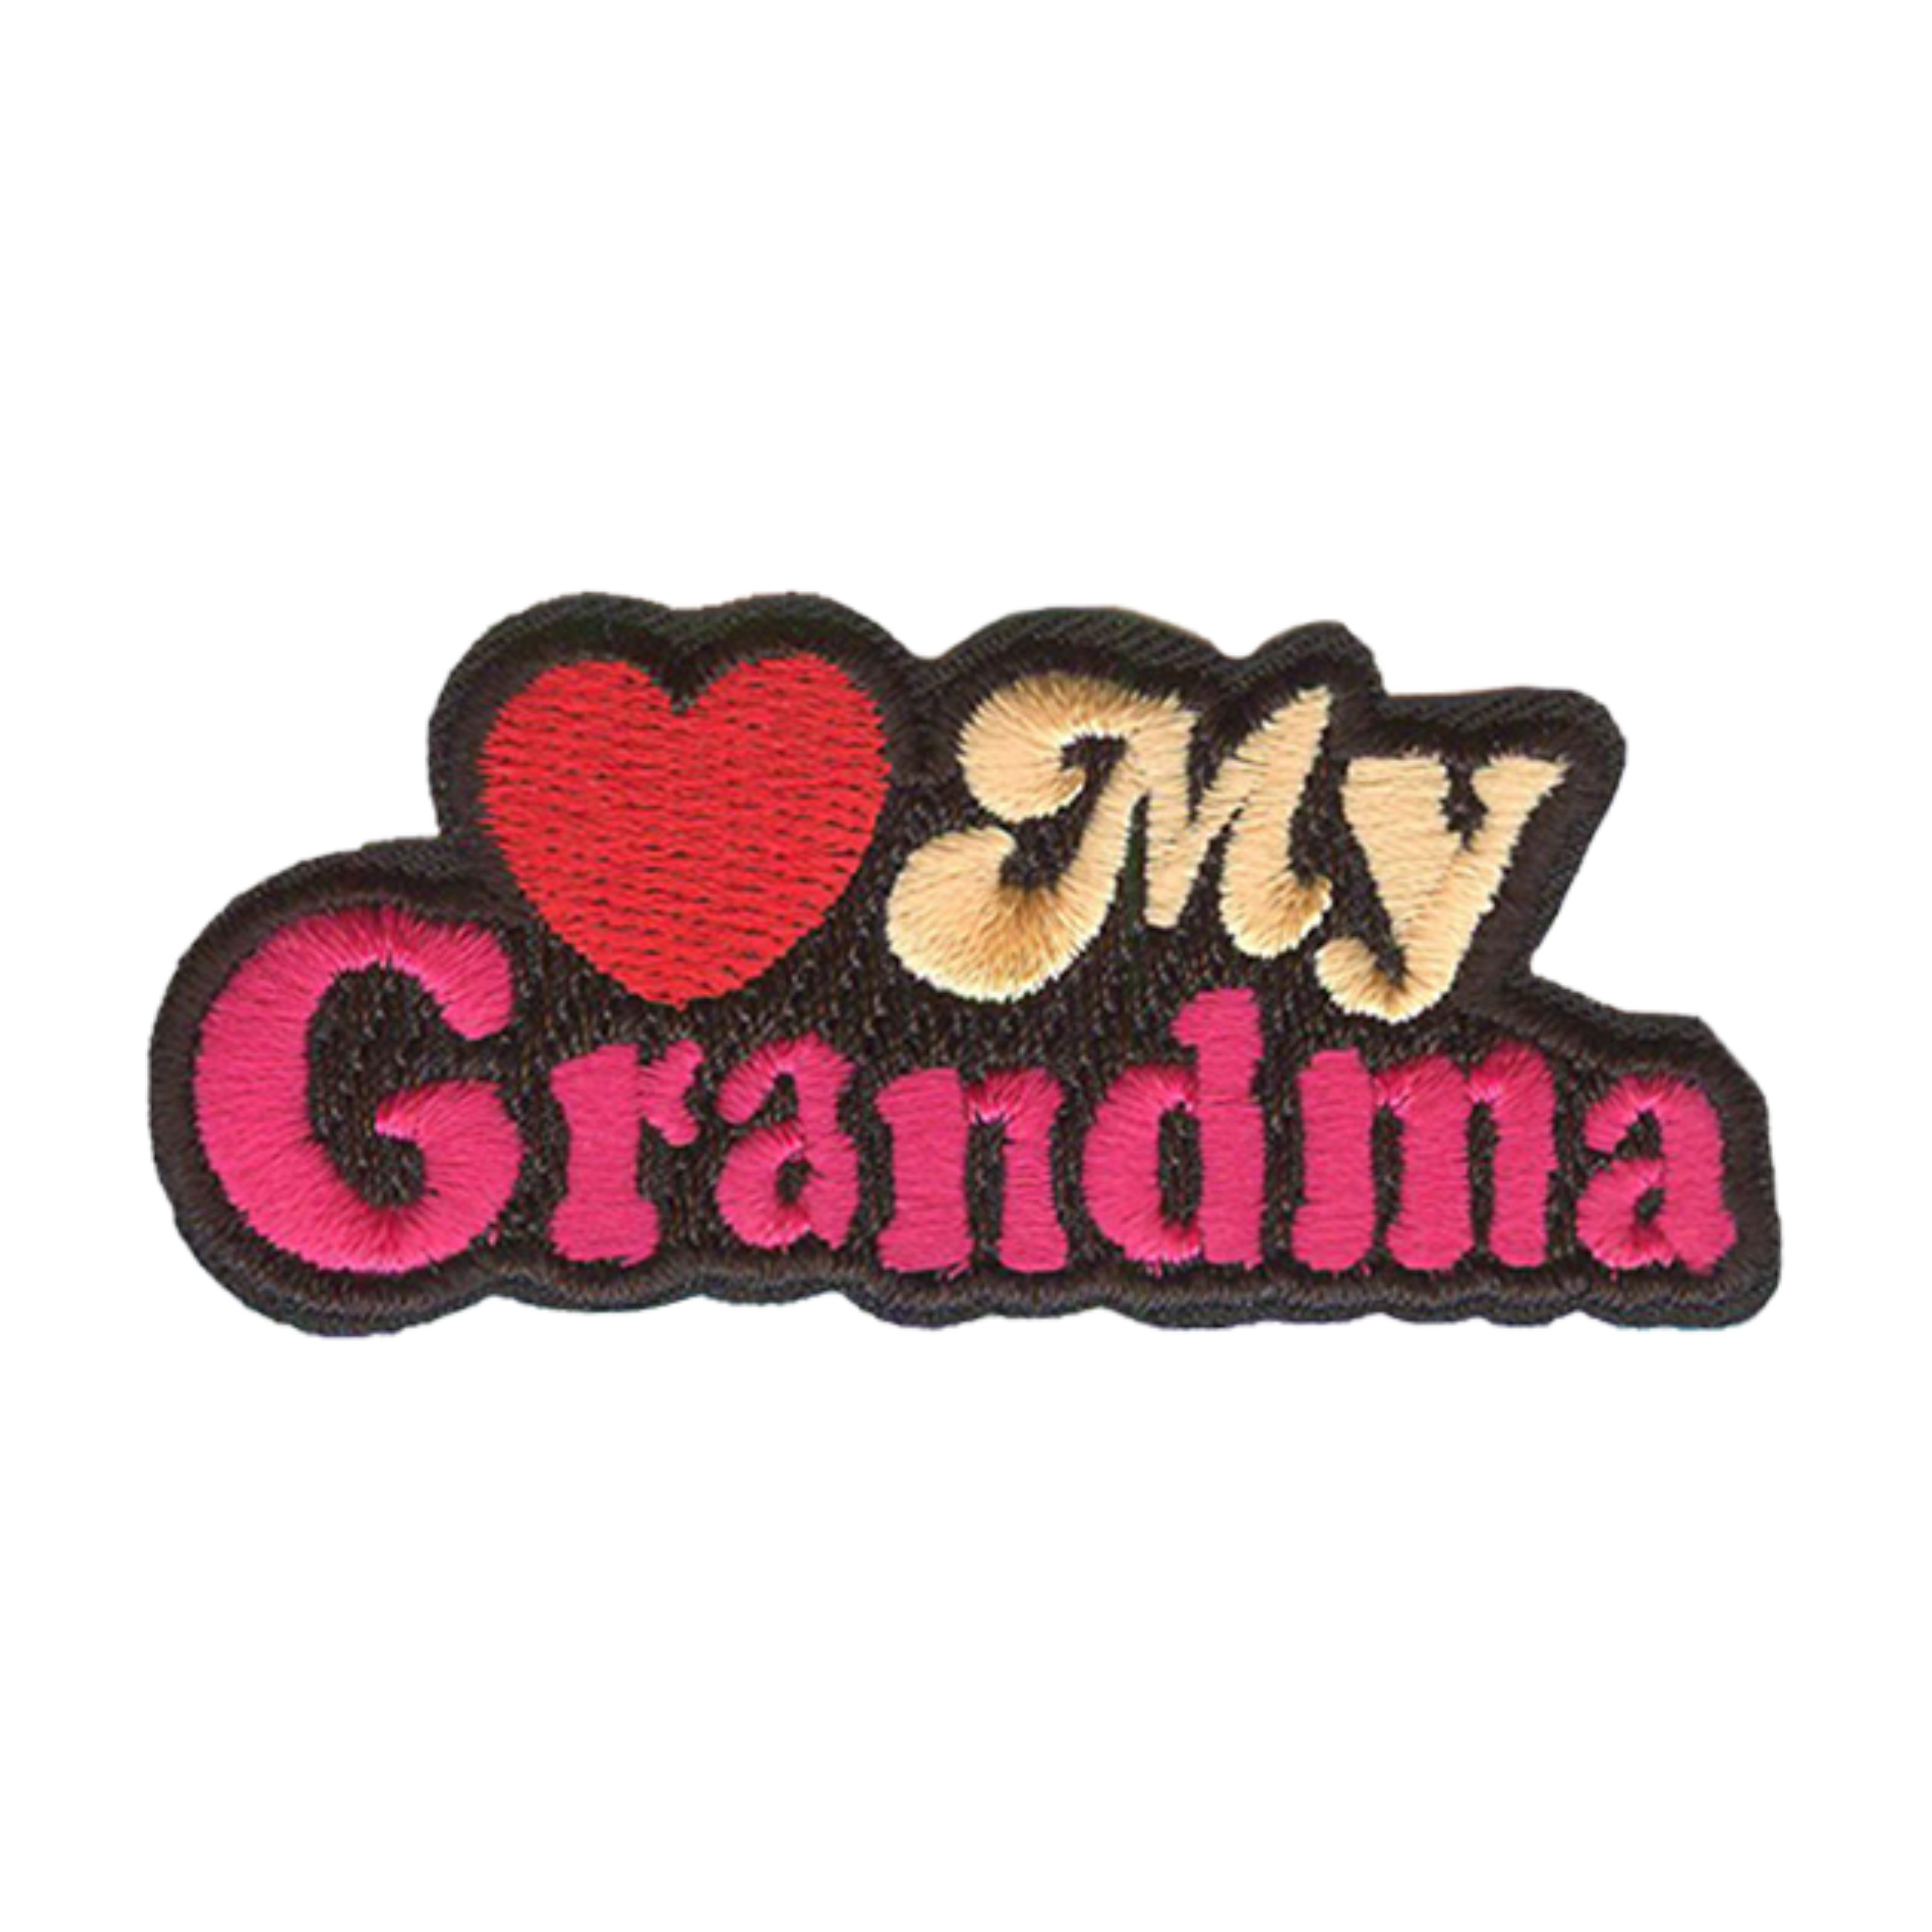 Grandma's love. Grandma Pickled logo.